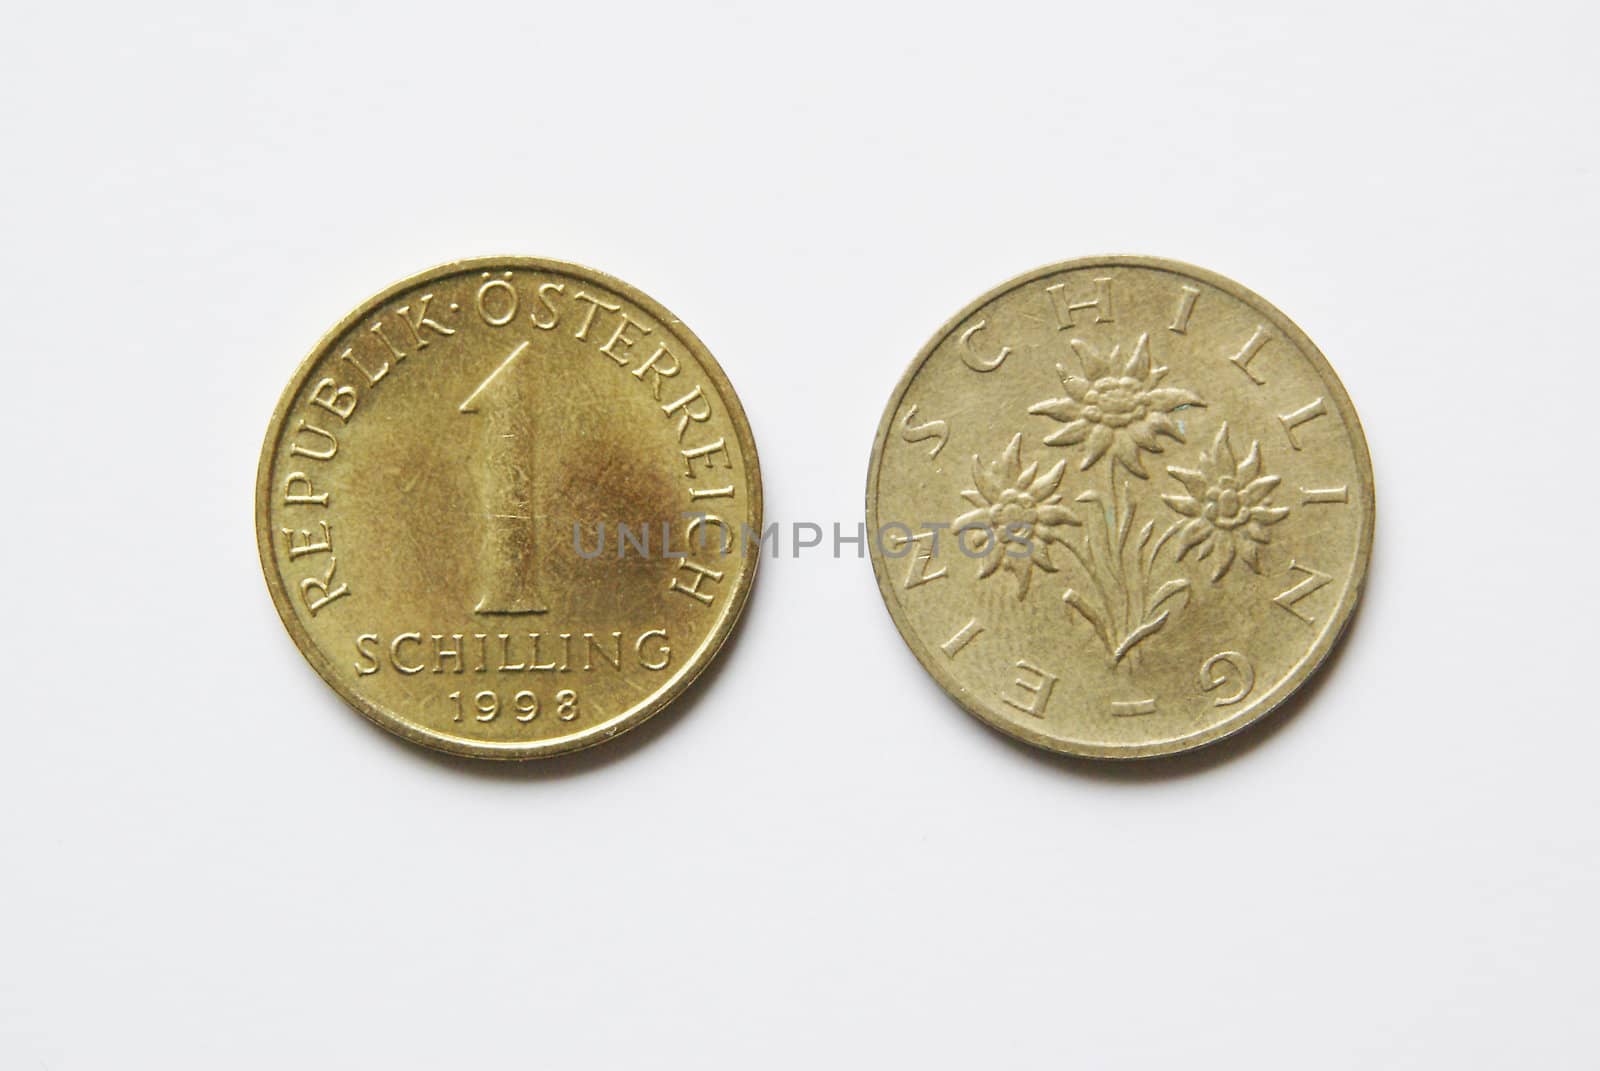 Austrian 1 Schilling coins by calexica